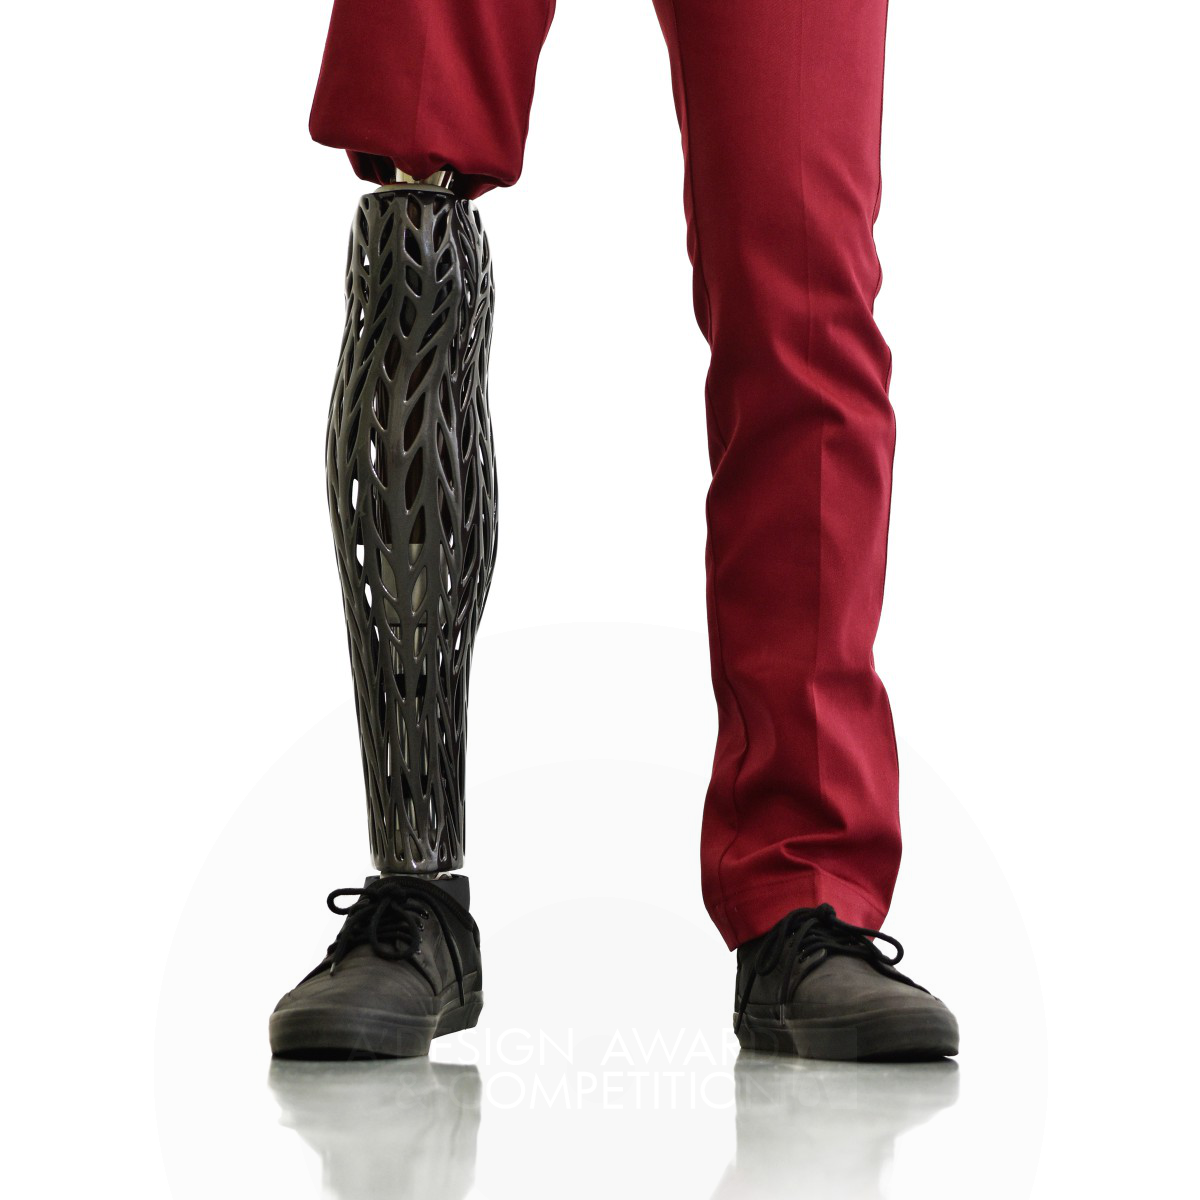 Tomas Vacek, Art4Leg 3D printed prosthesis cover